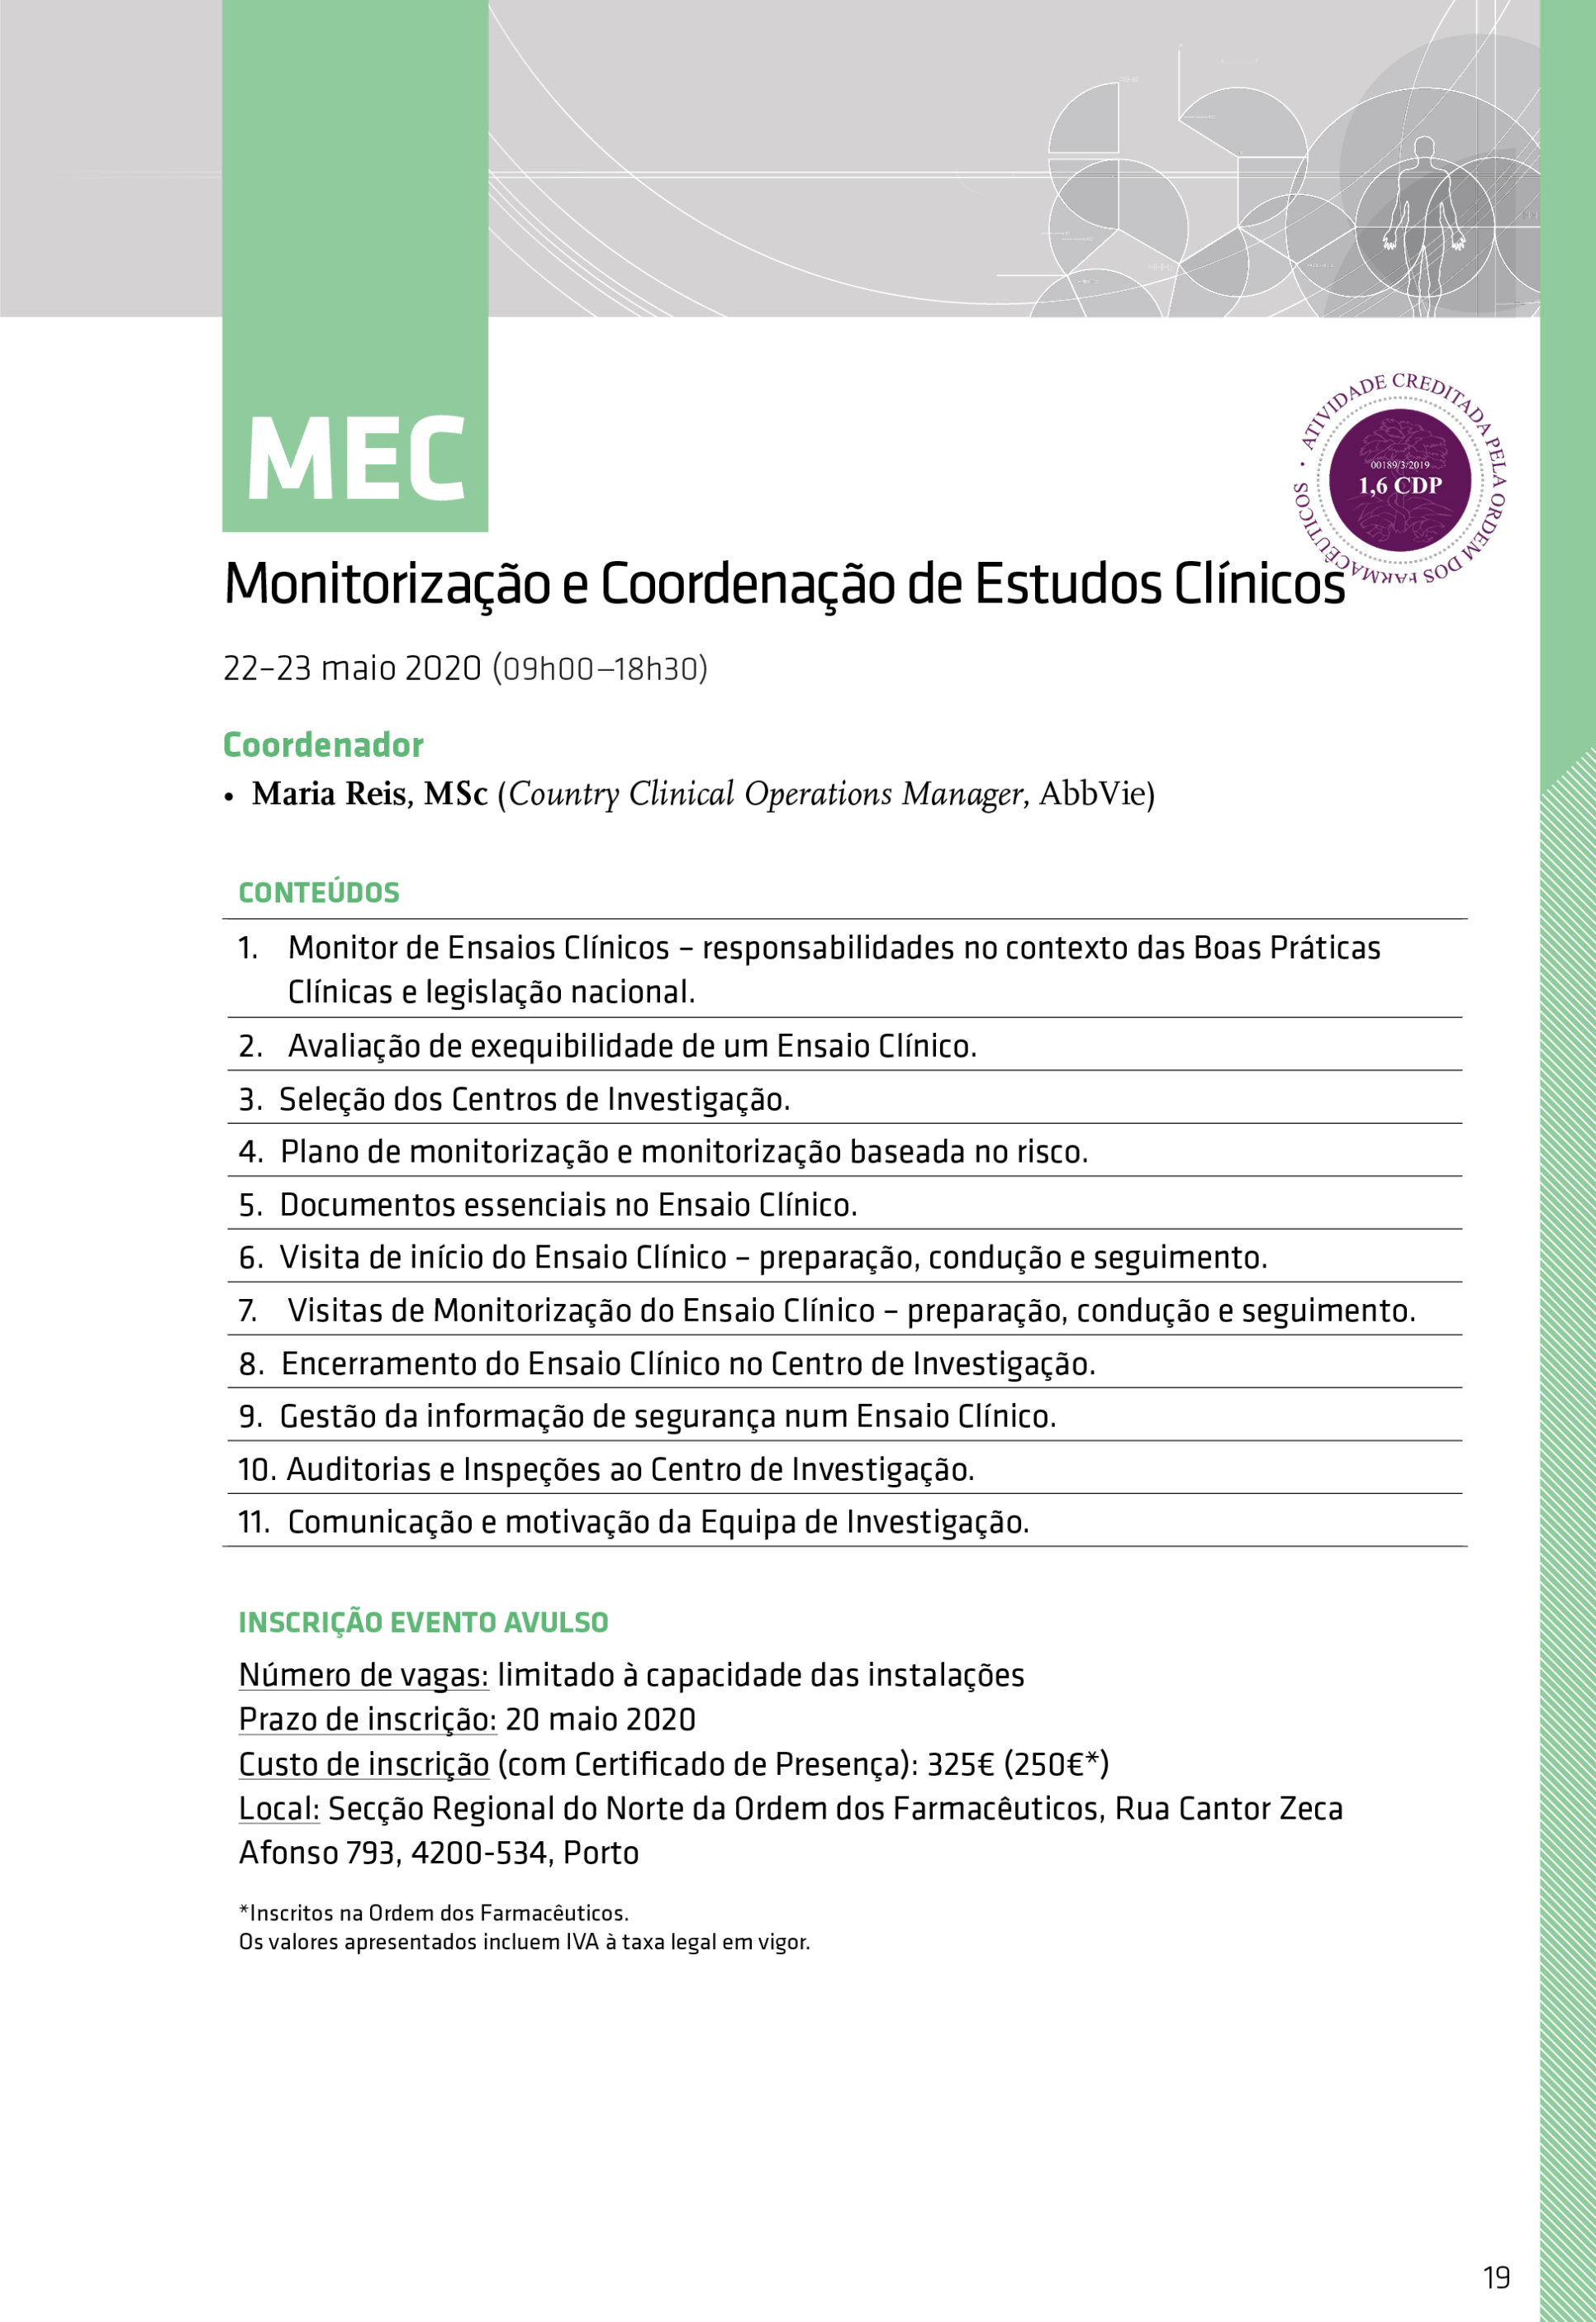 MEC - Programa